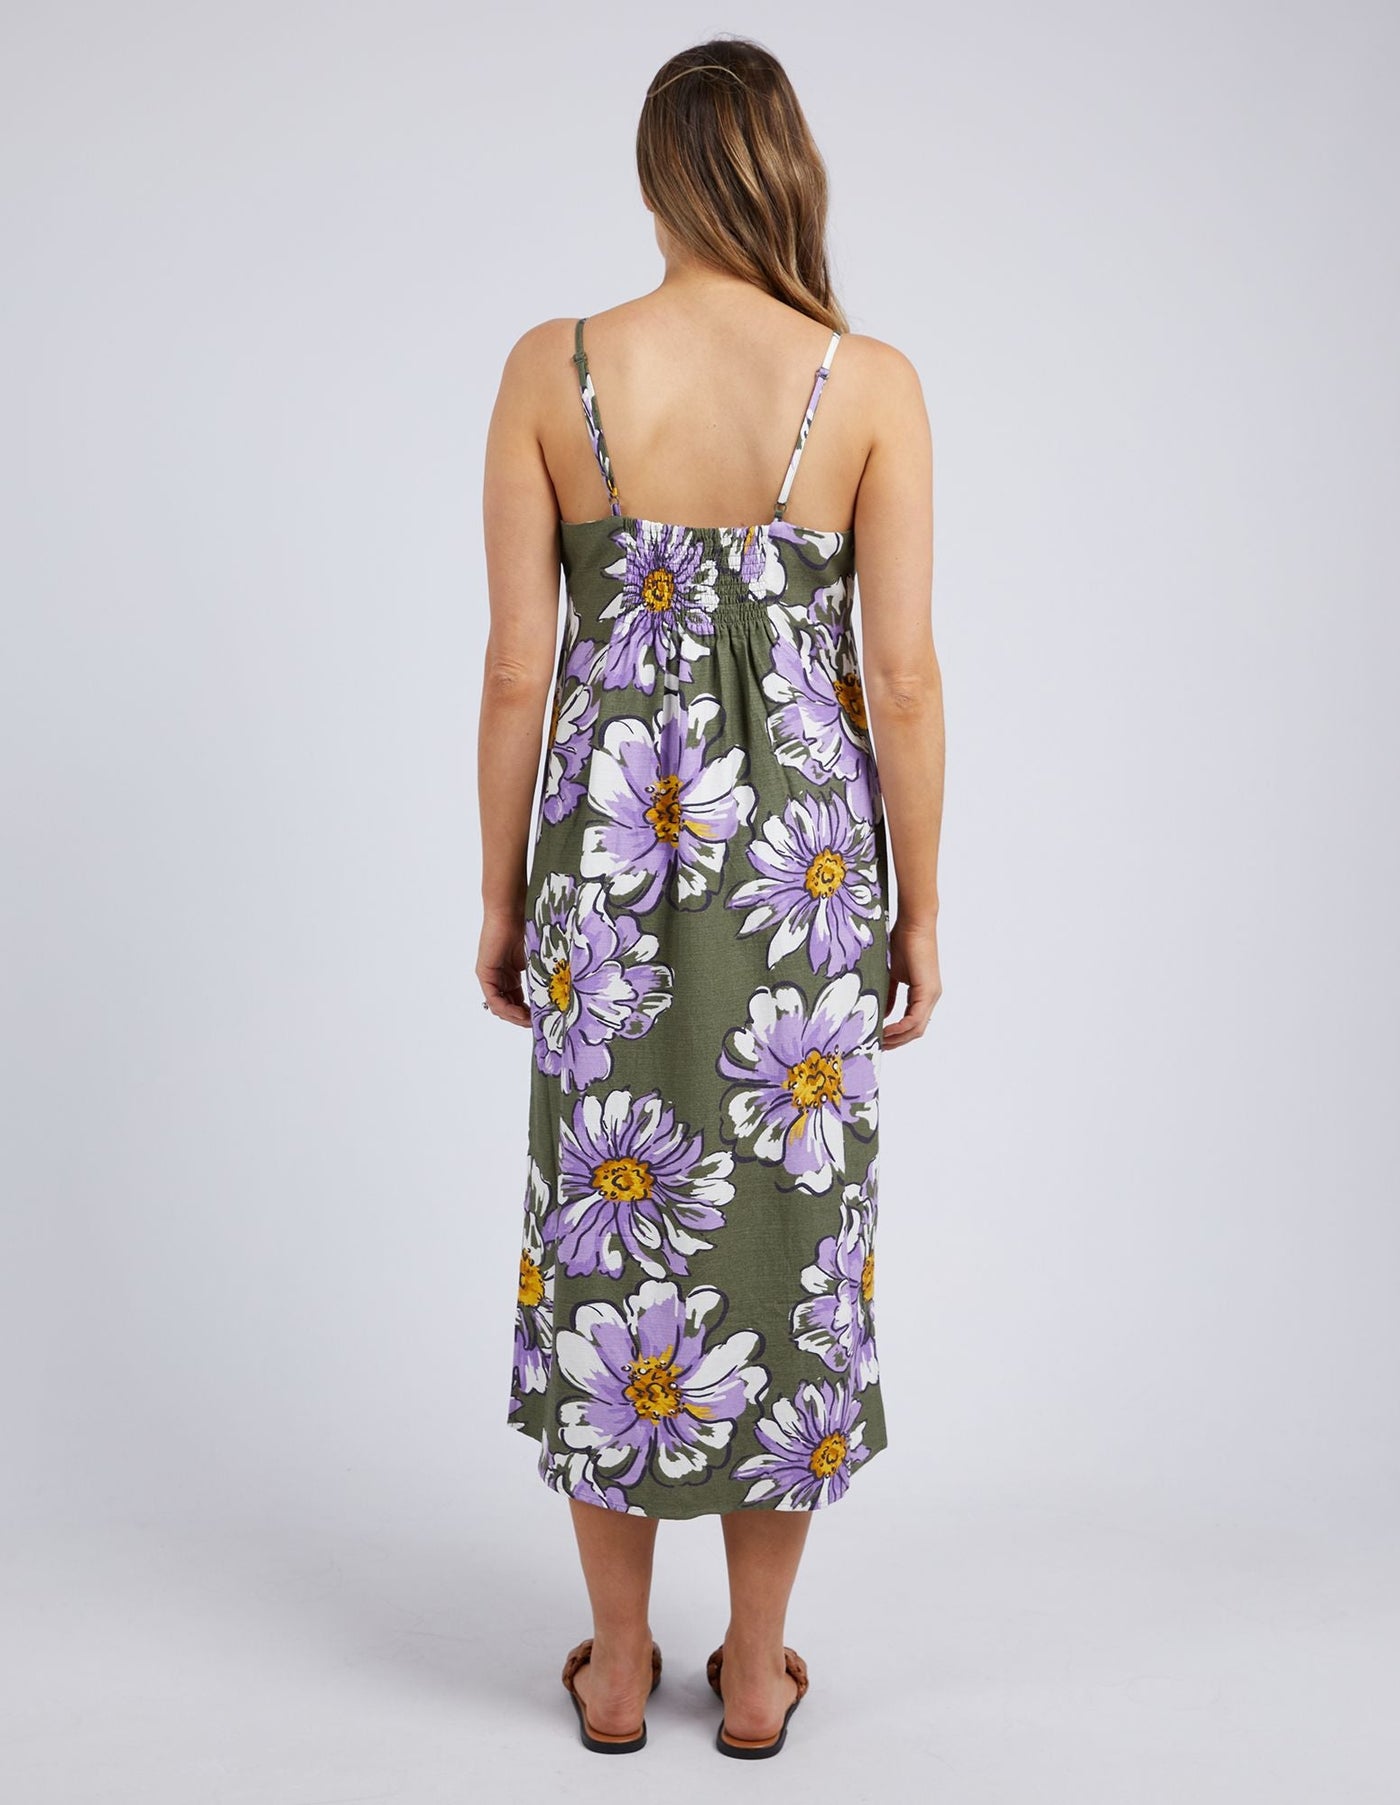 Antheia Floral Slip Dress - Floral-Elm Lifestyle-Lima & Co